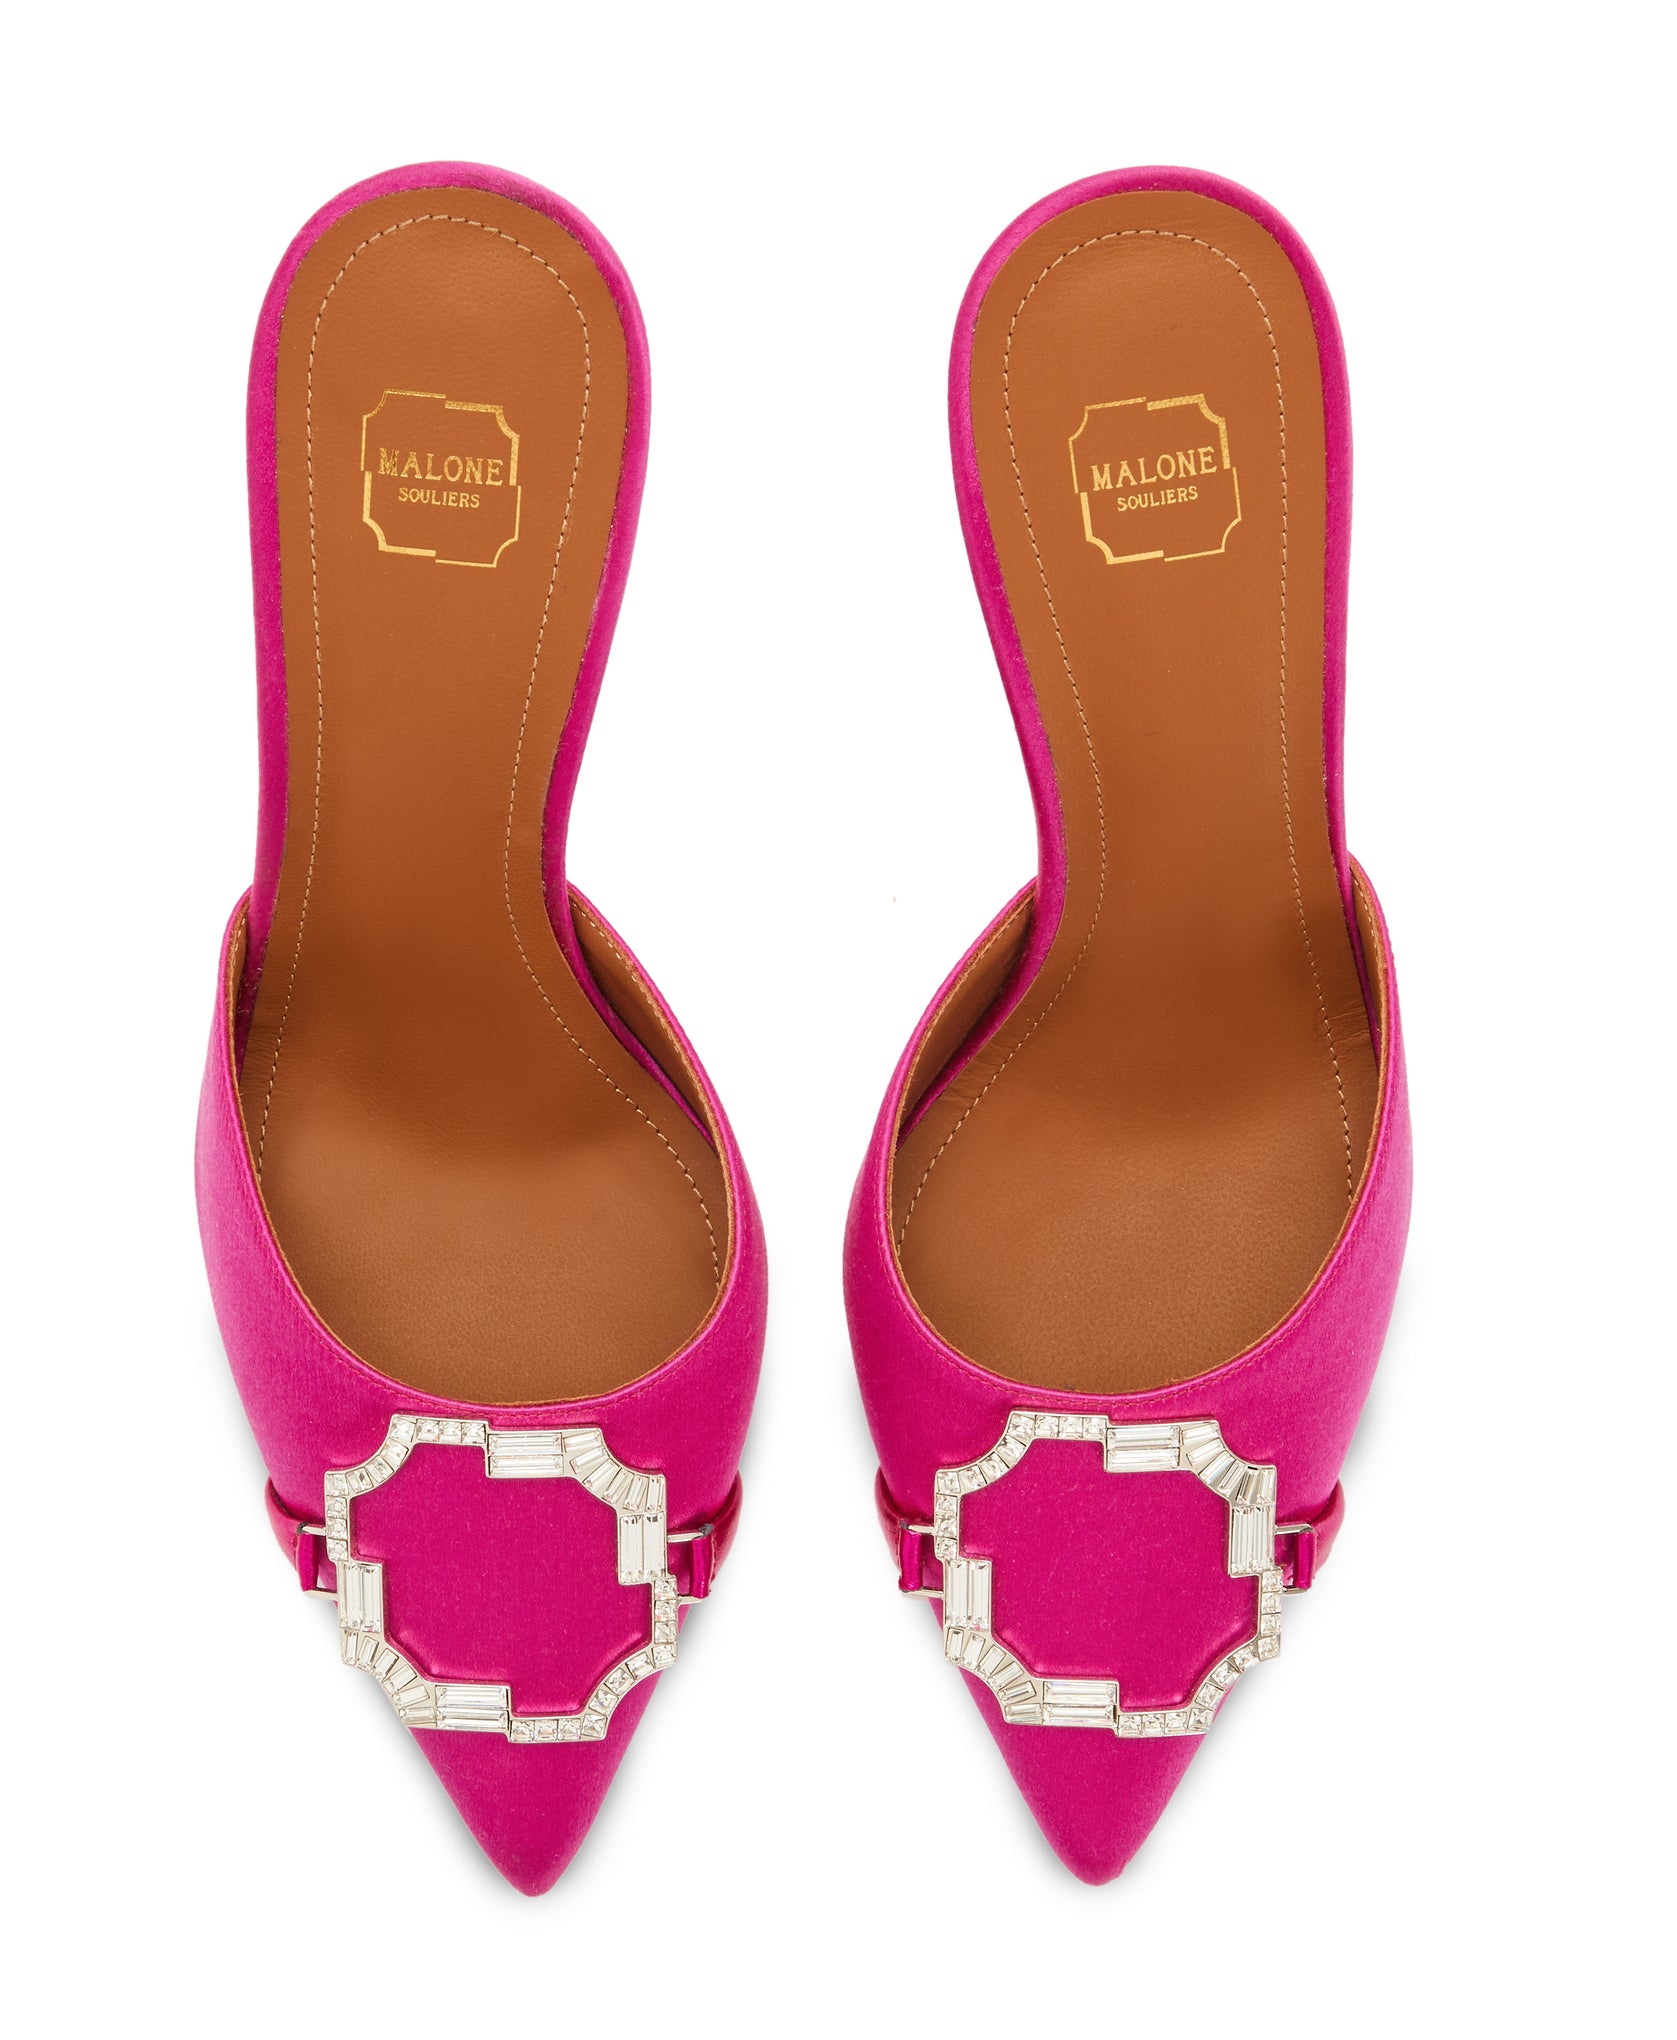 Missy 85mm Stiletto Heel Pink Satin Mules | Malone Souliers